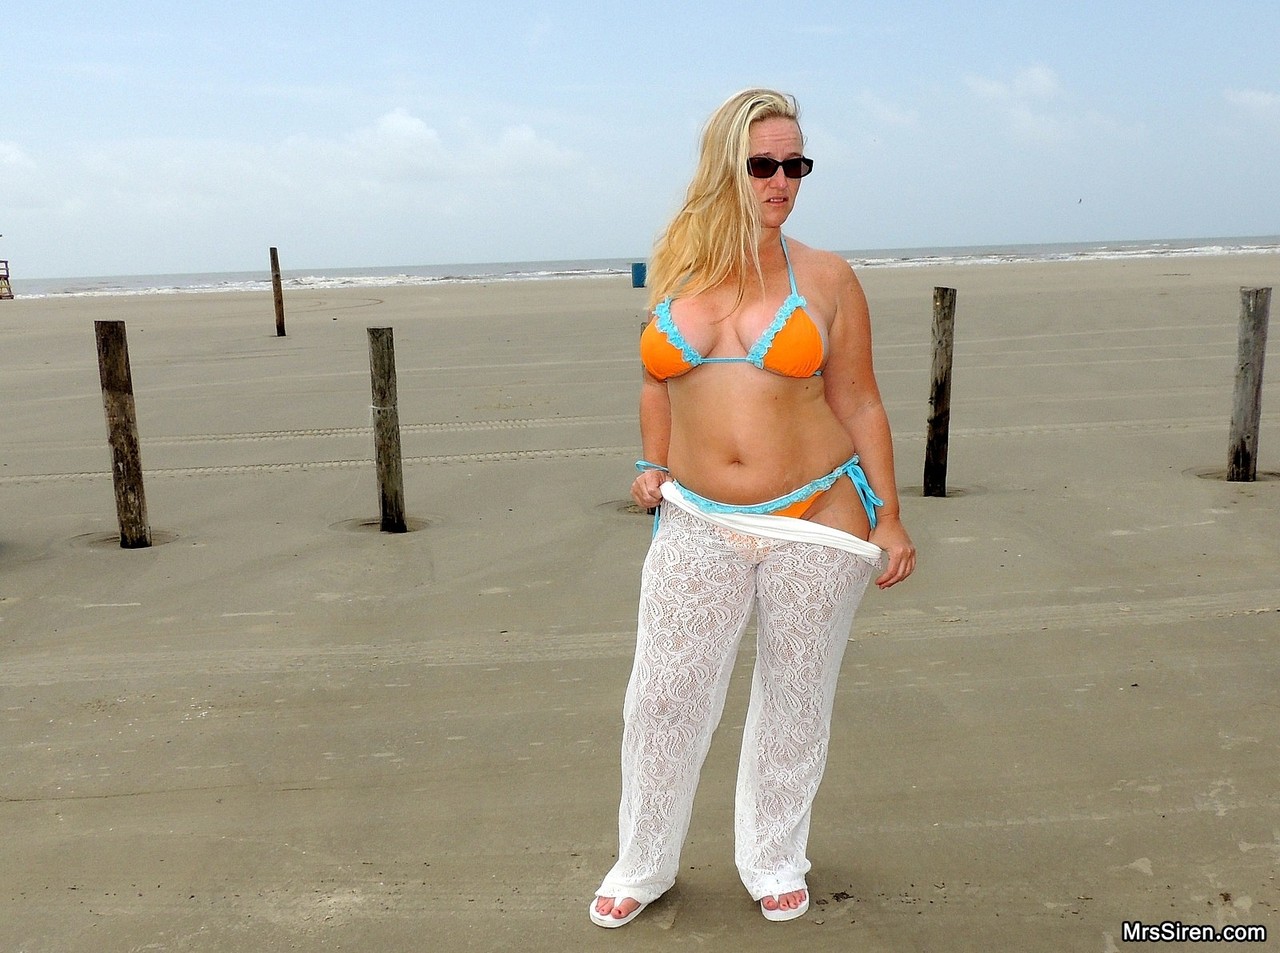 Short MILF Dee Siren strips on the beach & exposes her monster curves zdjęcie porno #425972300 | Mrs Siren Pics, Dee Siren, Chubby, mobilne porno